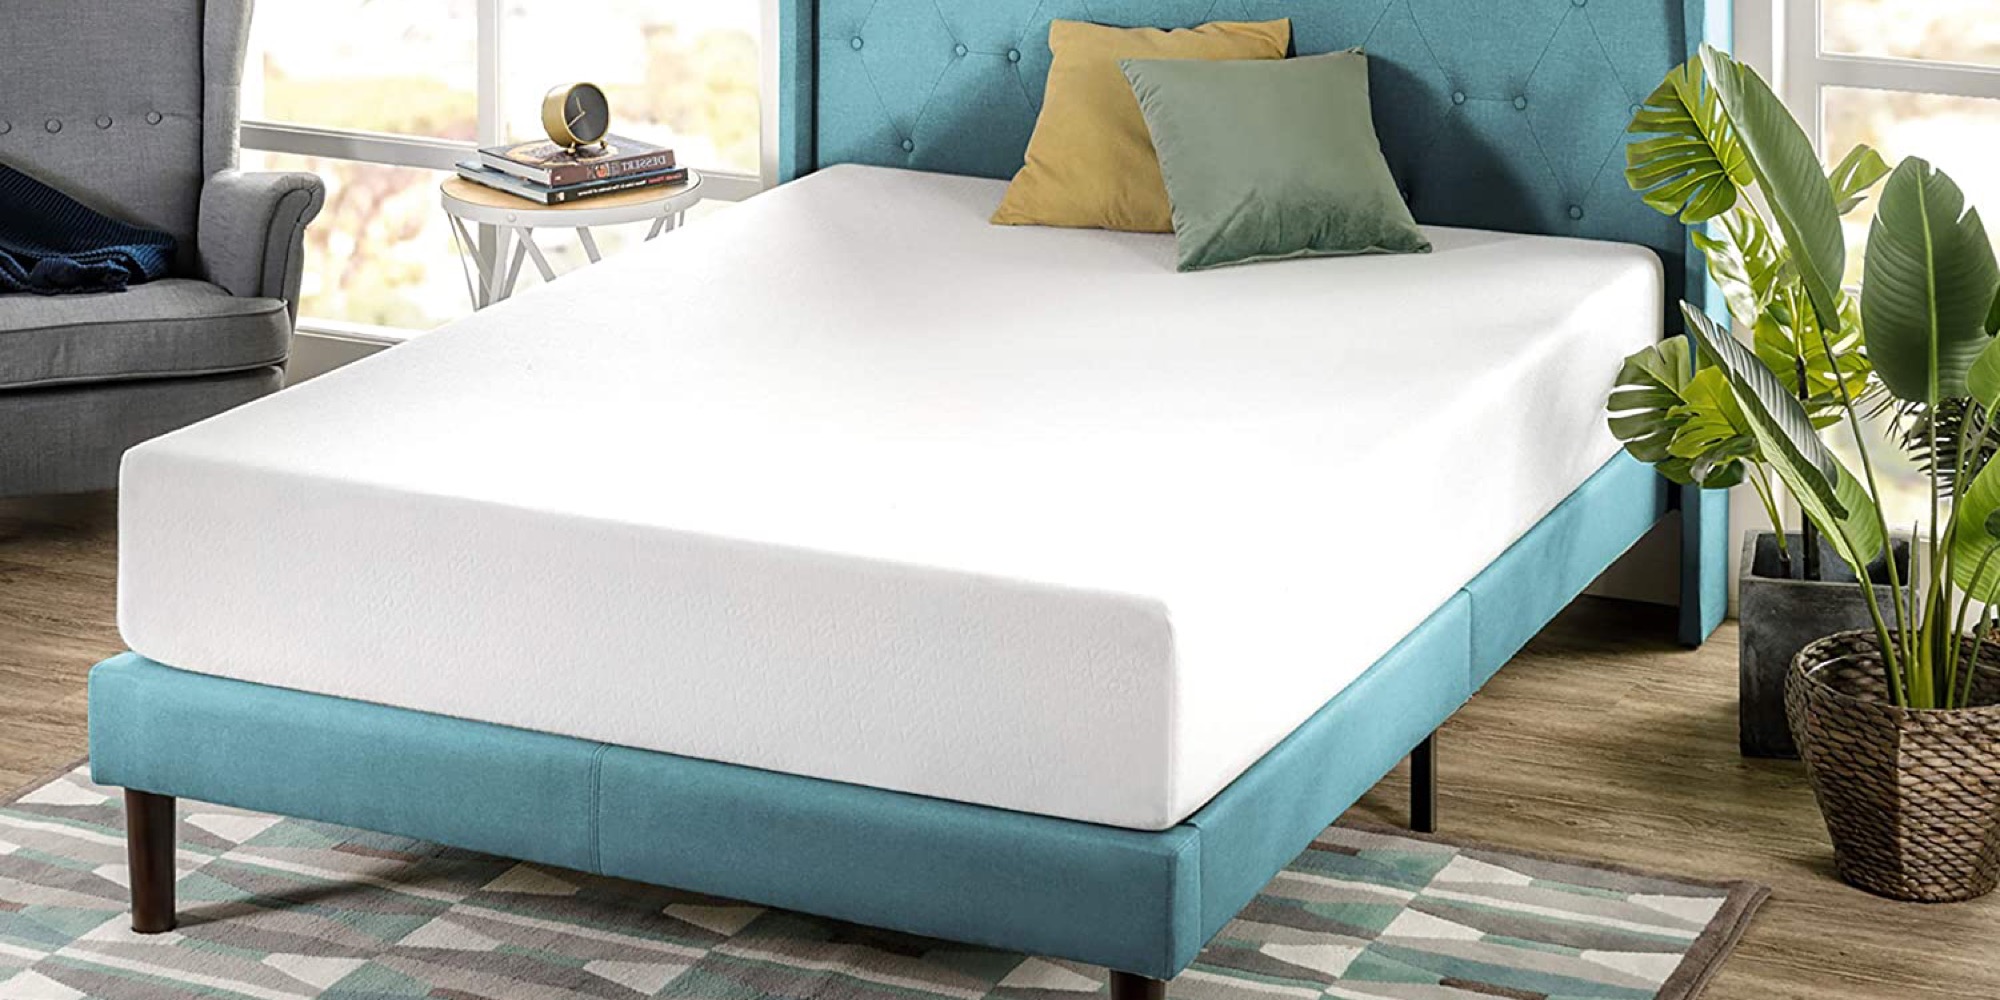 zinus 10 inch mattress review